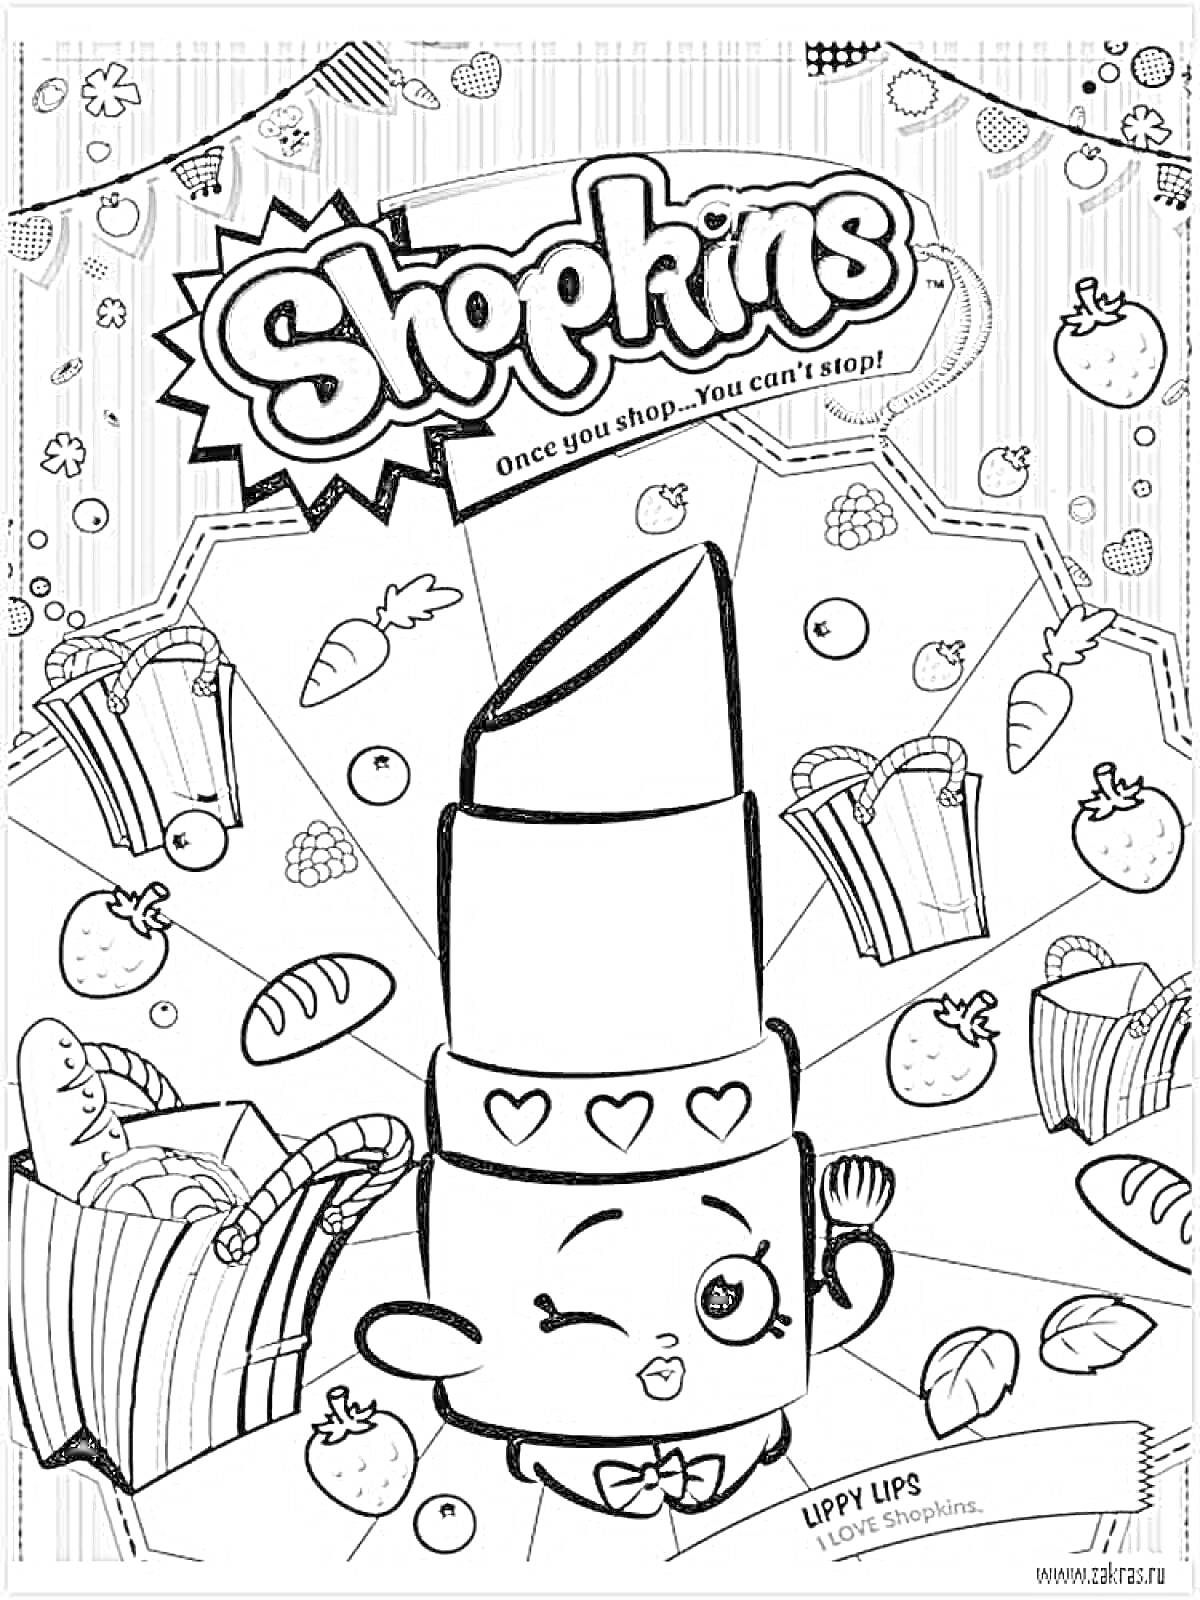 Раскраска Раскраска Шопкинс с Lippy Lips, подарками, ягодами и конфетами